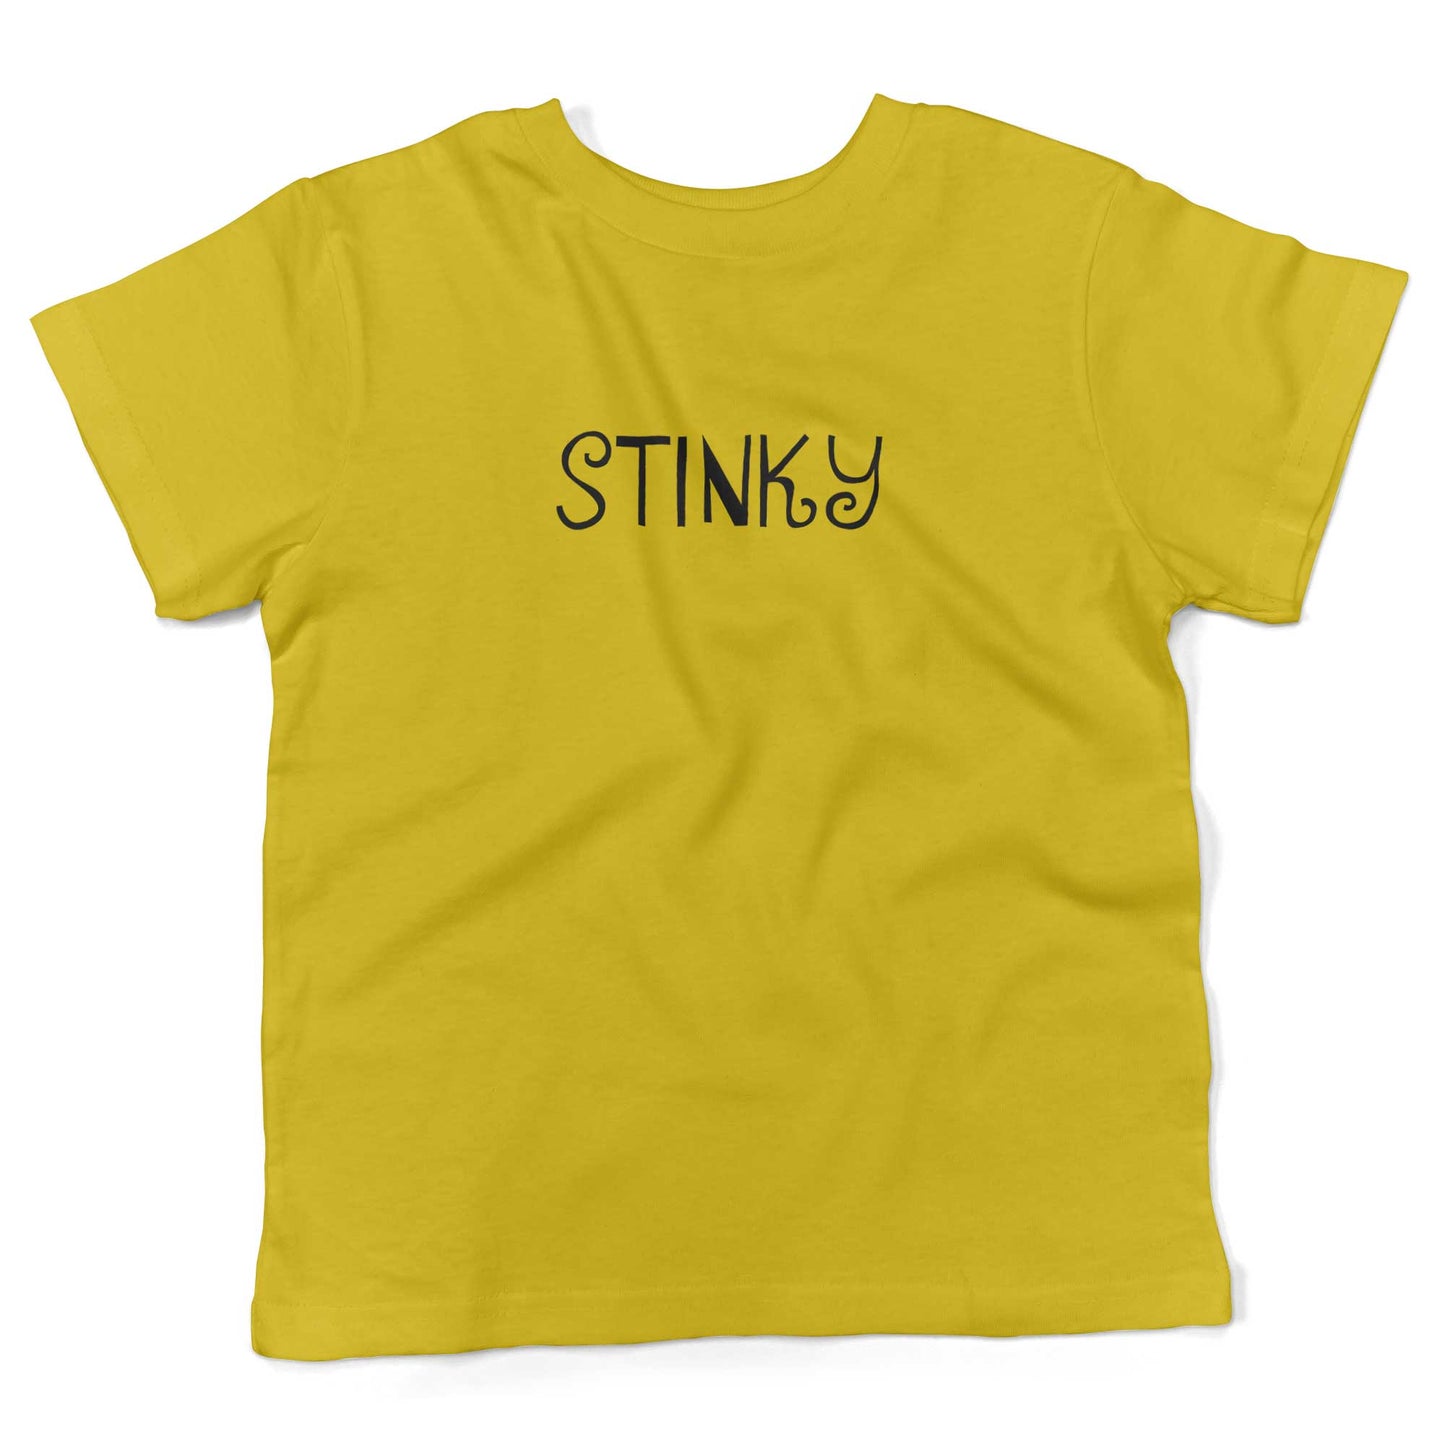 Stinky Toddler Shirt-Sunshine Yellow-2T